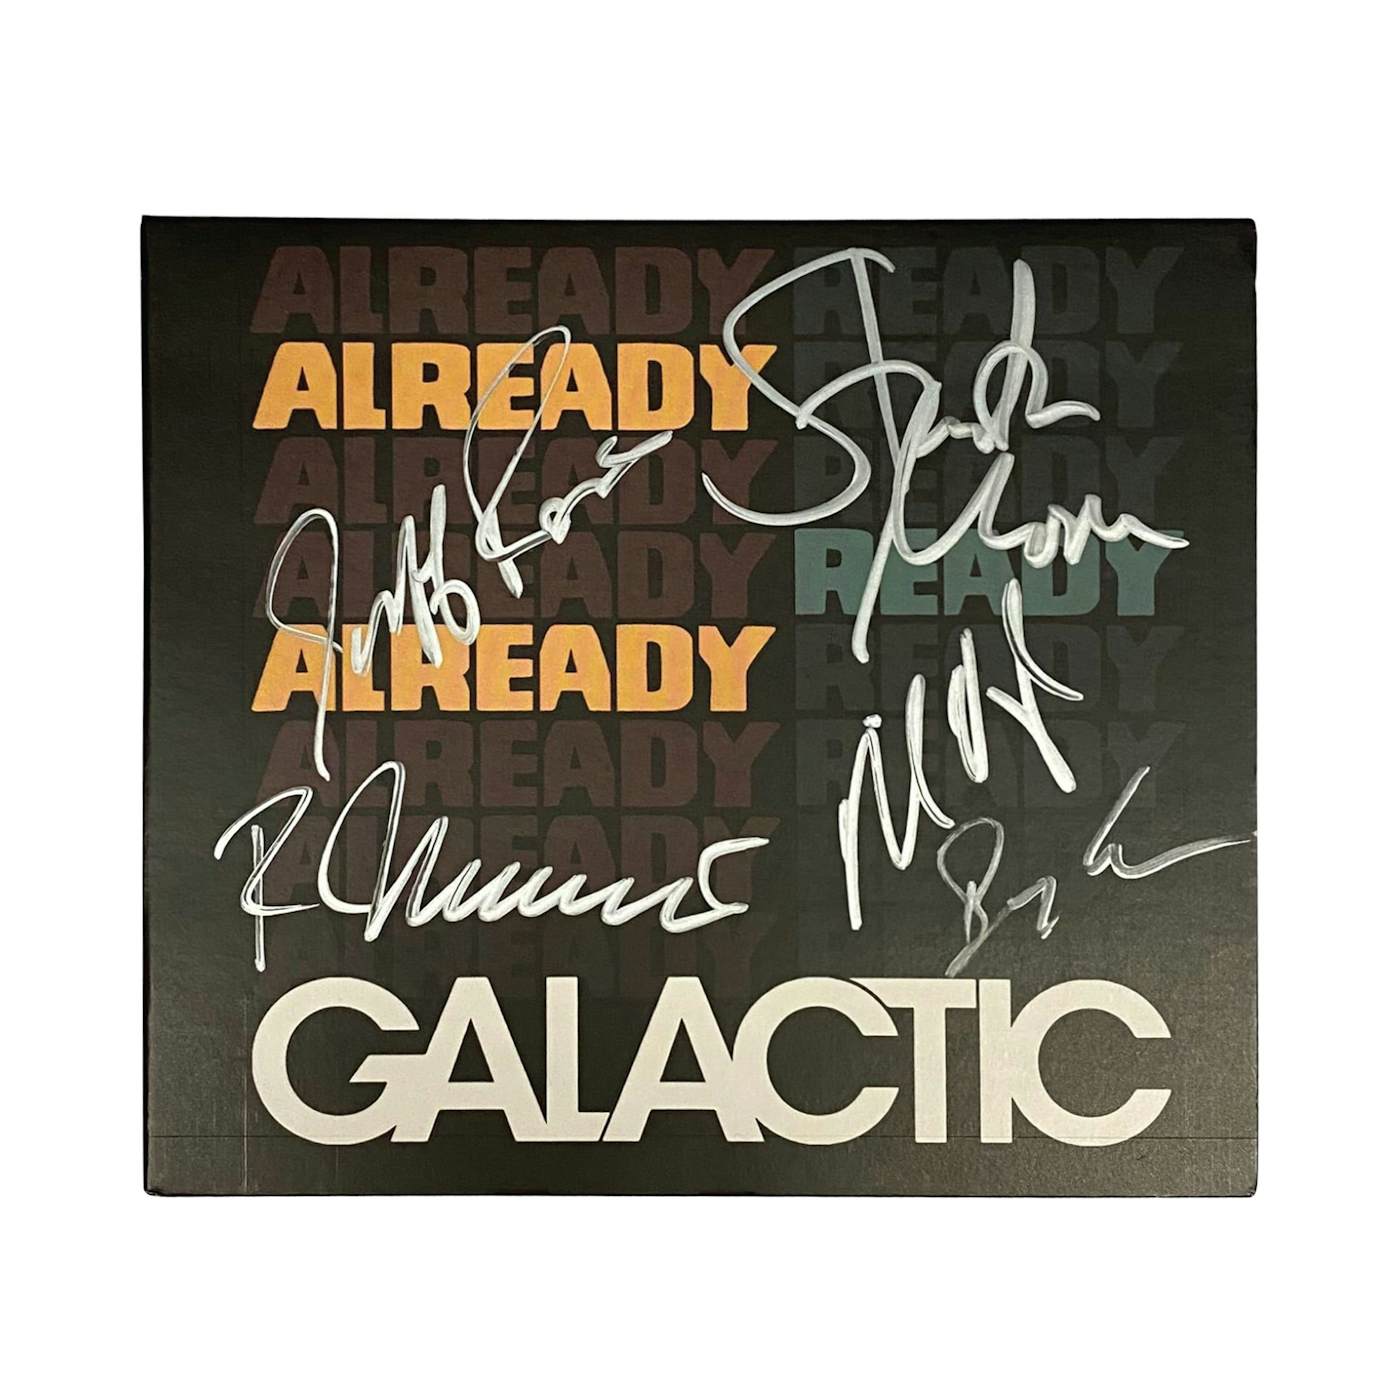 Galactic - Already Ready Already CD - SIGNED